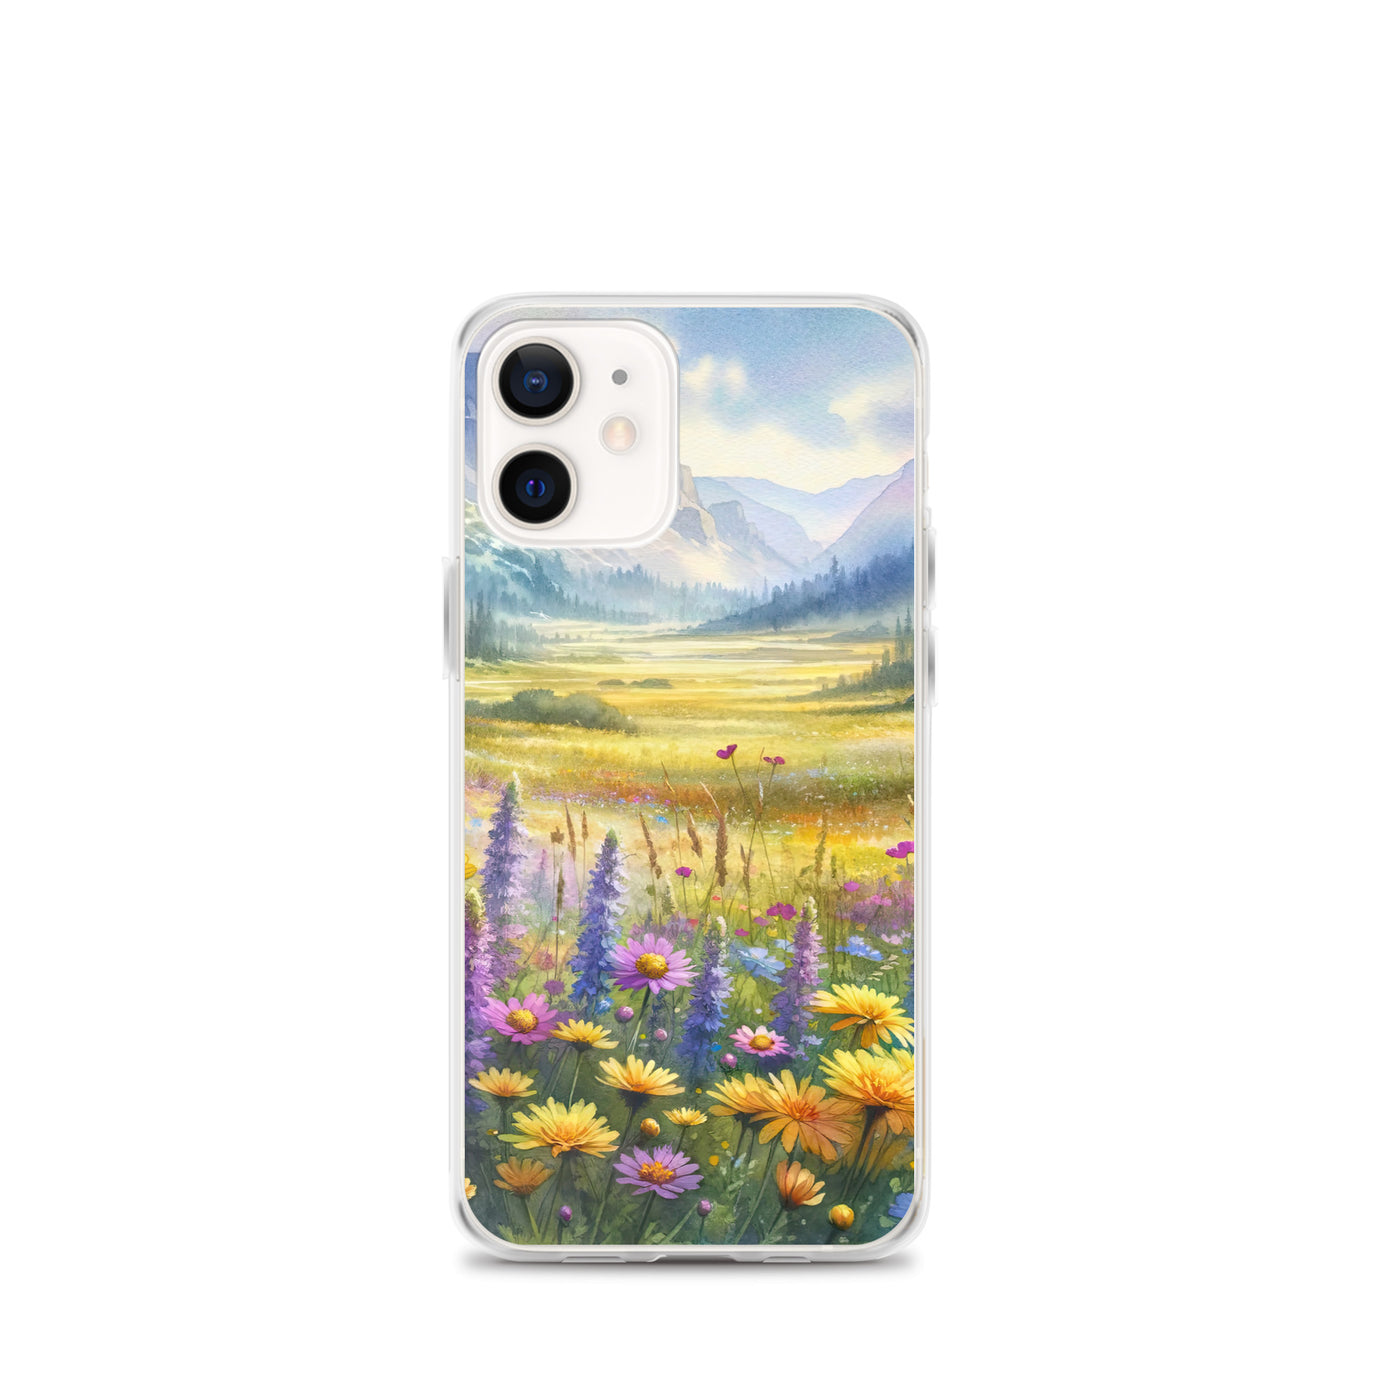 Aquarell einer Almwiese in Ruhe, Wildblumenteppich in Gelb, Lila, Rosa - iPhone Schutzhülle (durchsichtig) berge xxx yyy zzz iPhone 12 mini